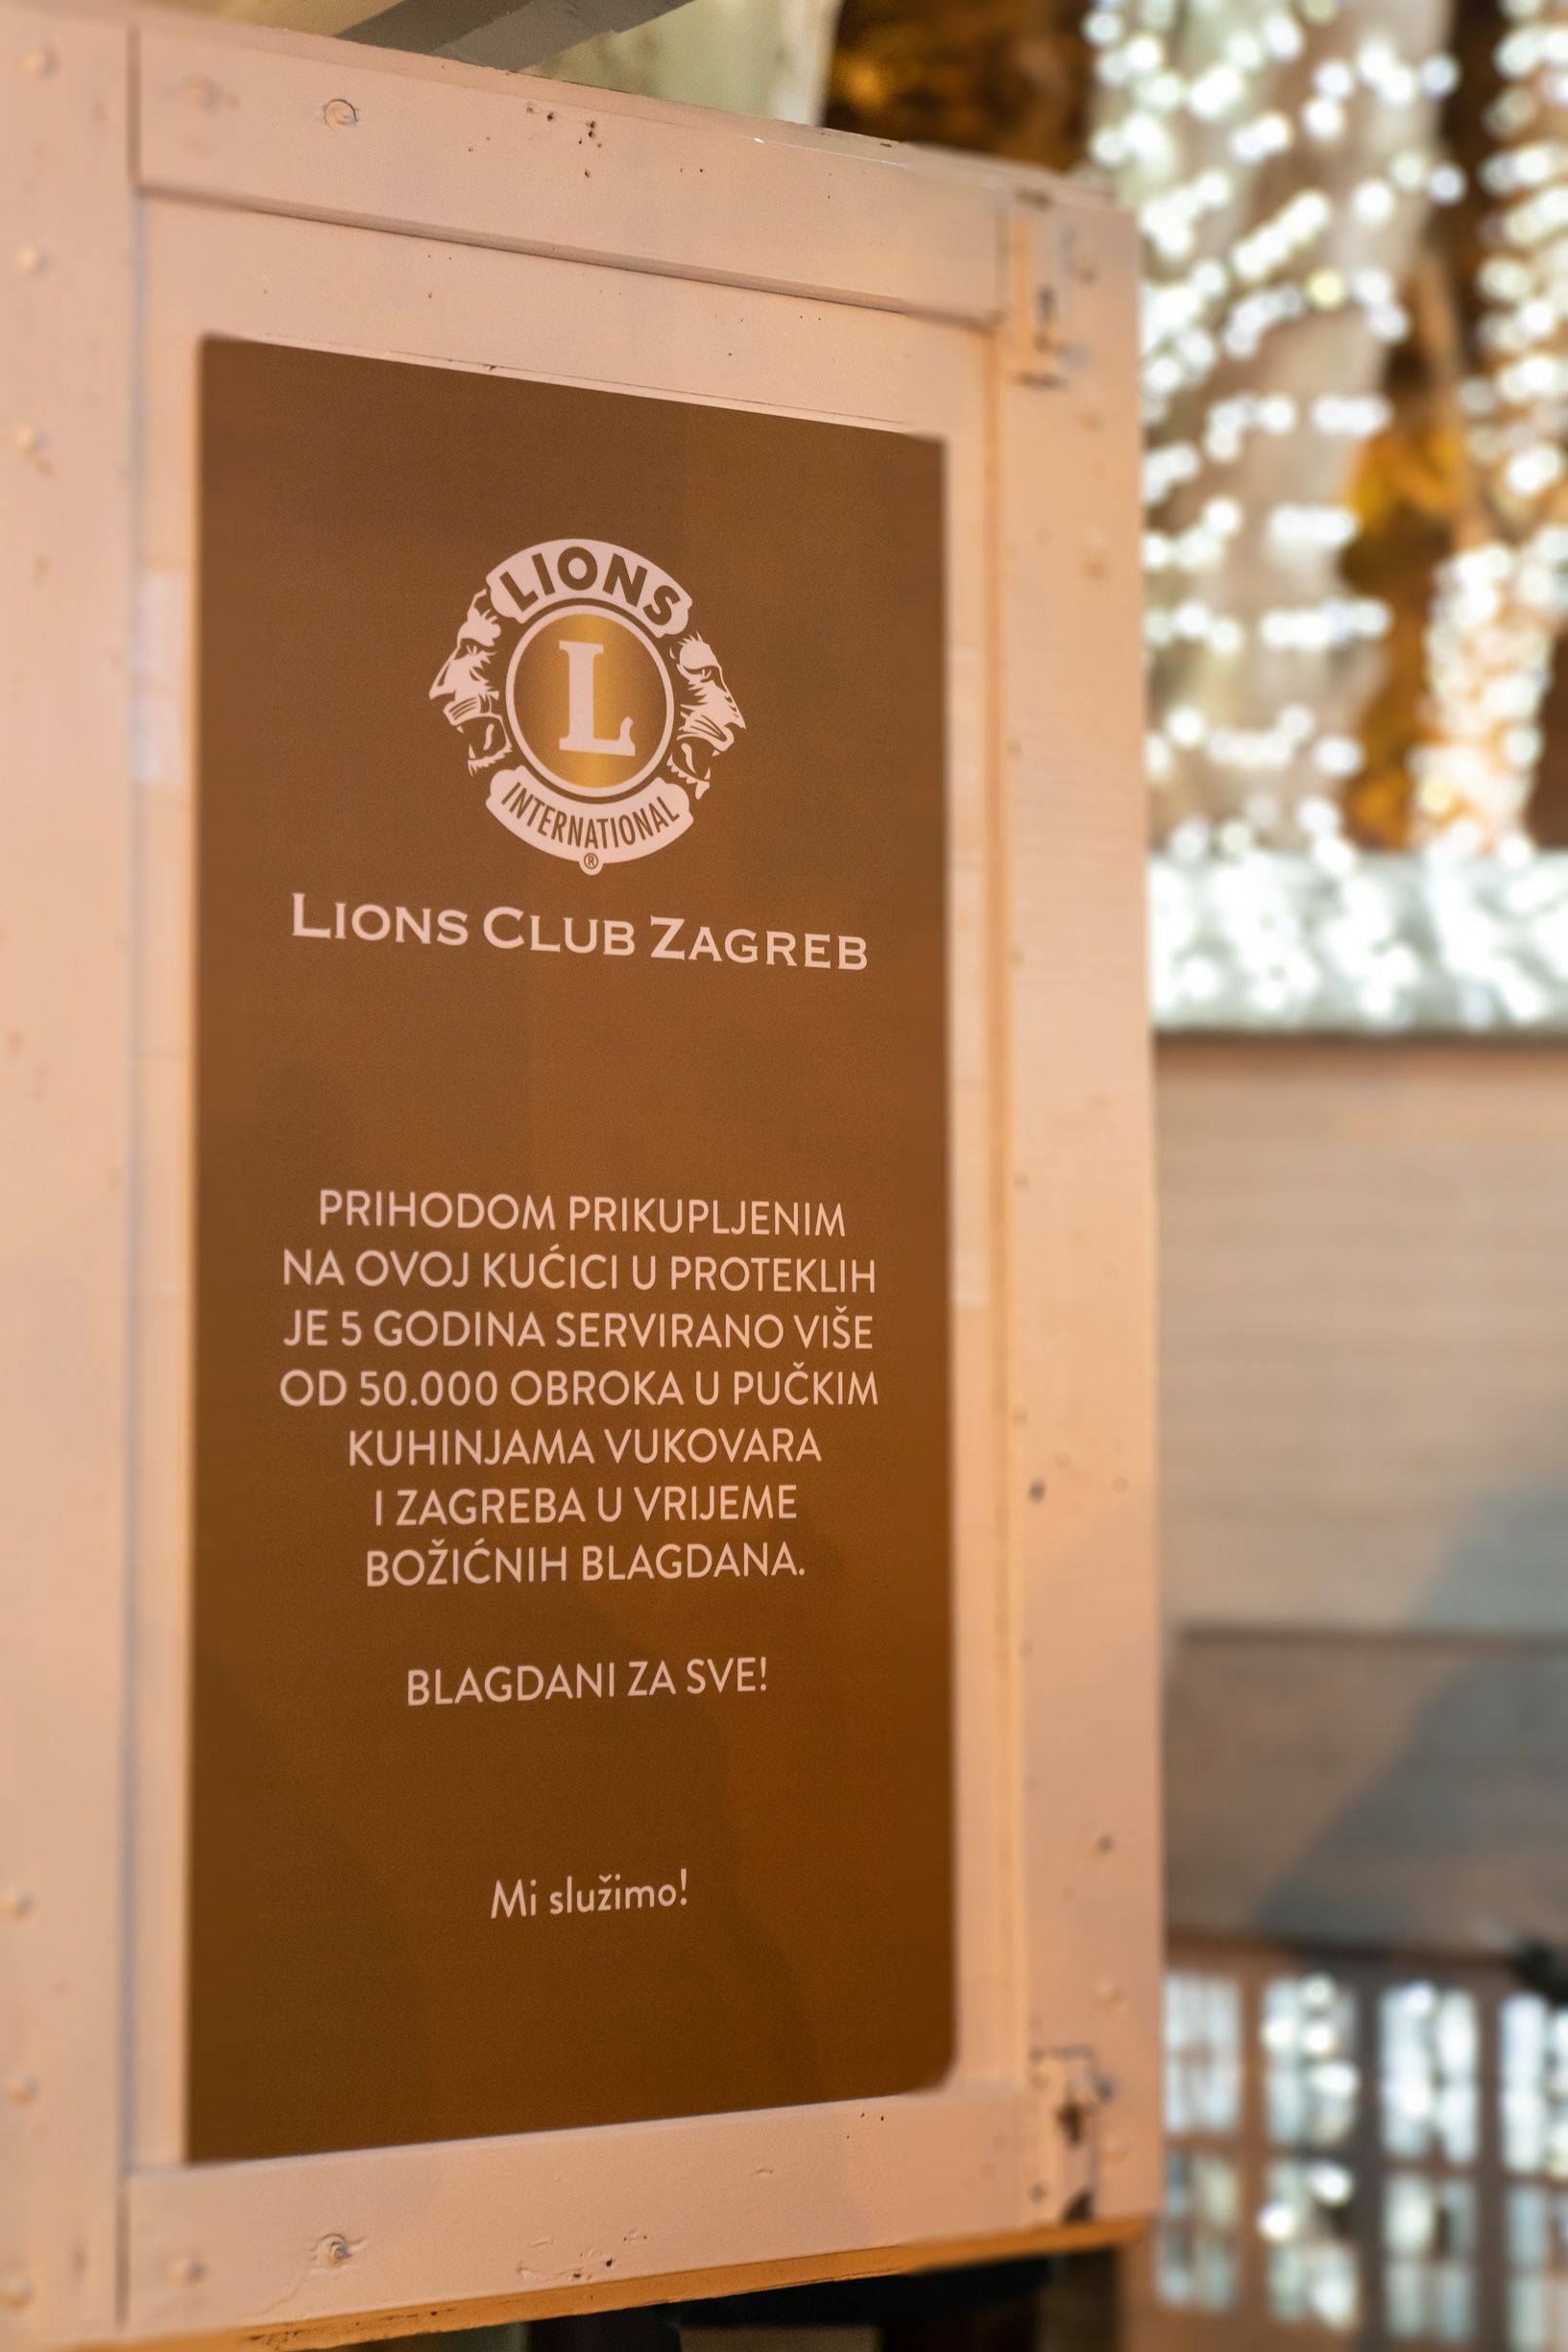 Lions Klub Zagreb na adventu skuplja novac za pučke kuhinje